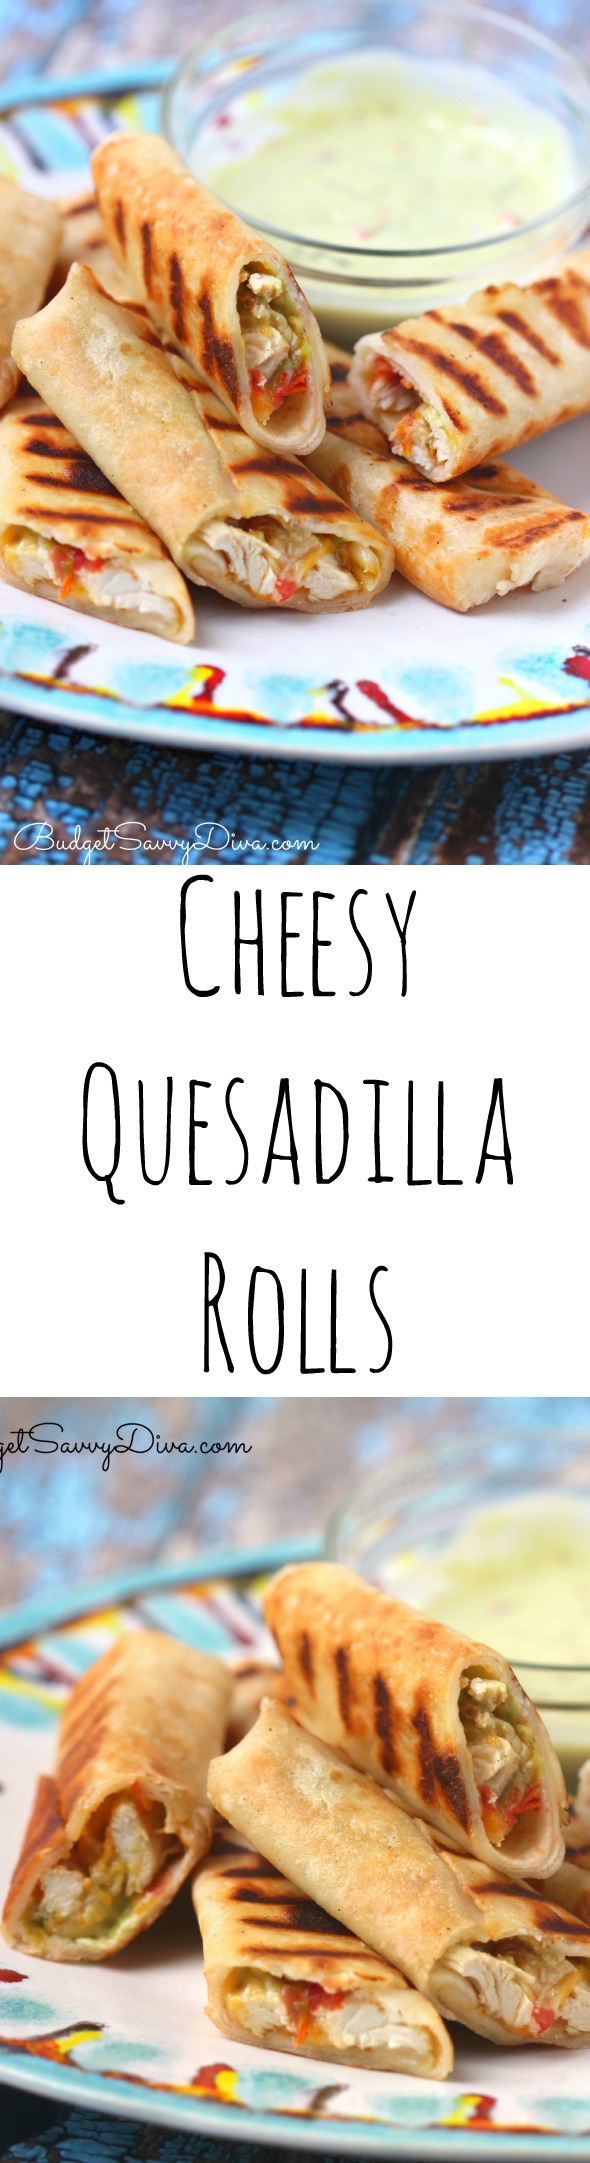 Cheesy Quesadilla Roll Recipe 